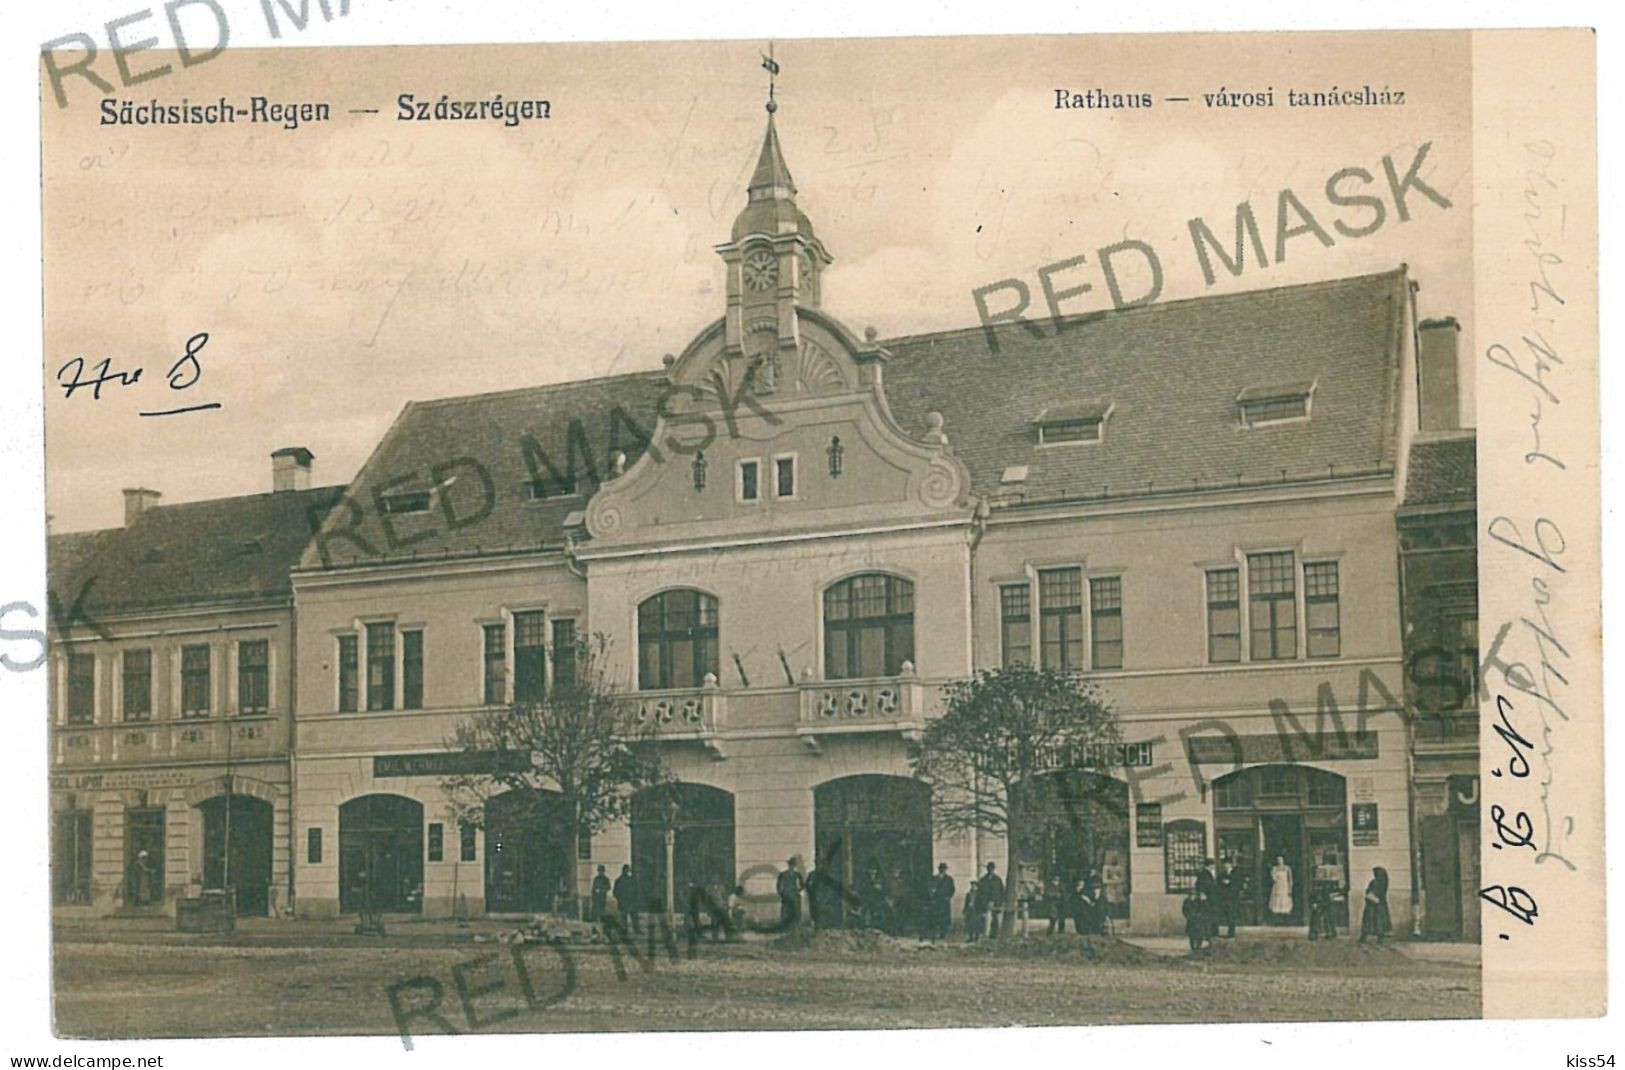 RO 86 - 10838 REGHIN, Mures, Romania - Old Postcard - Unused - 1911 - Romania